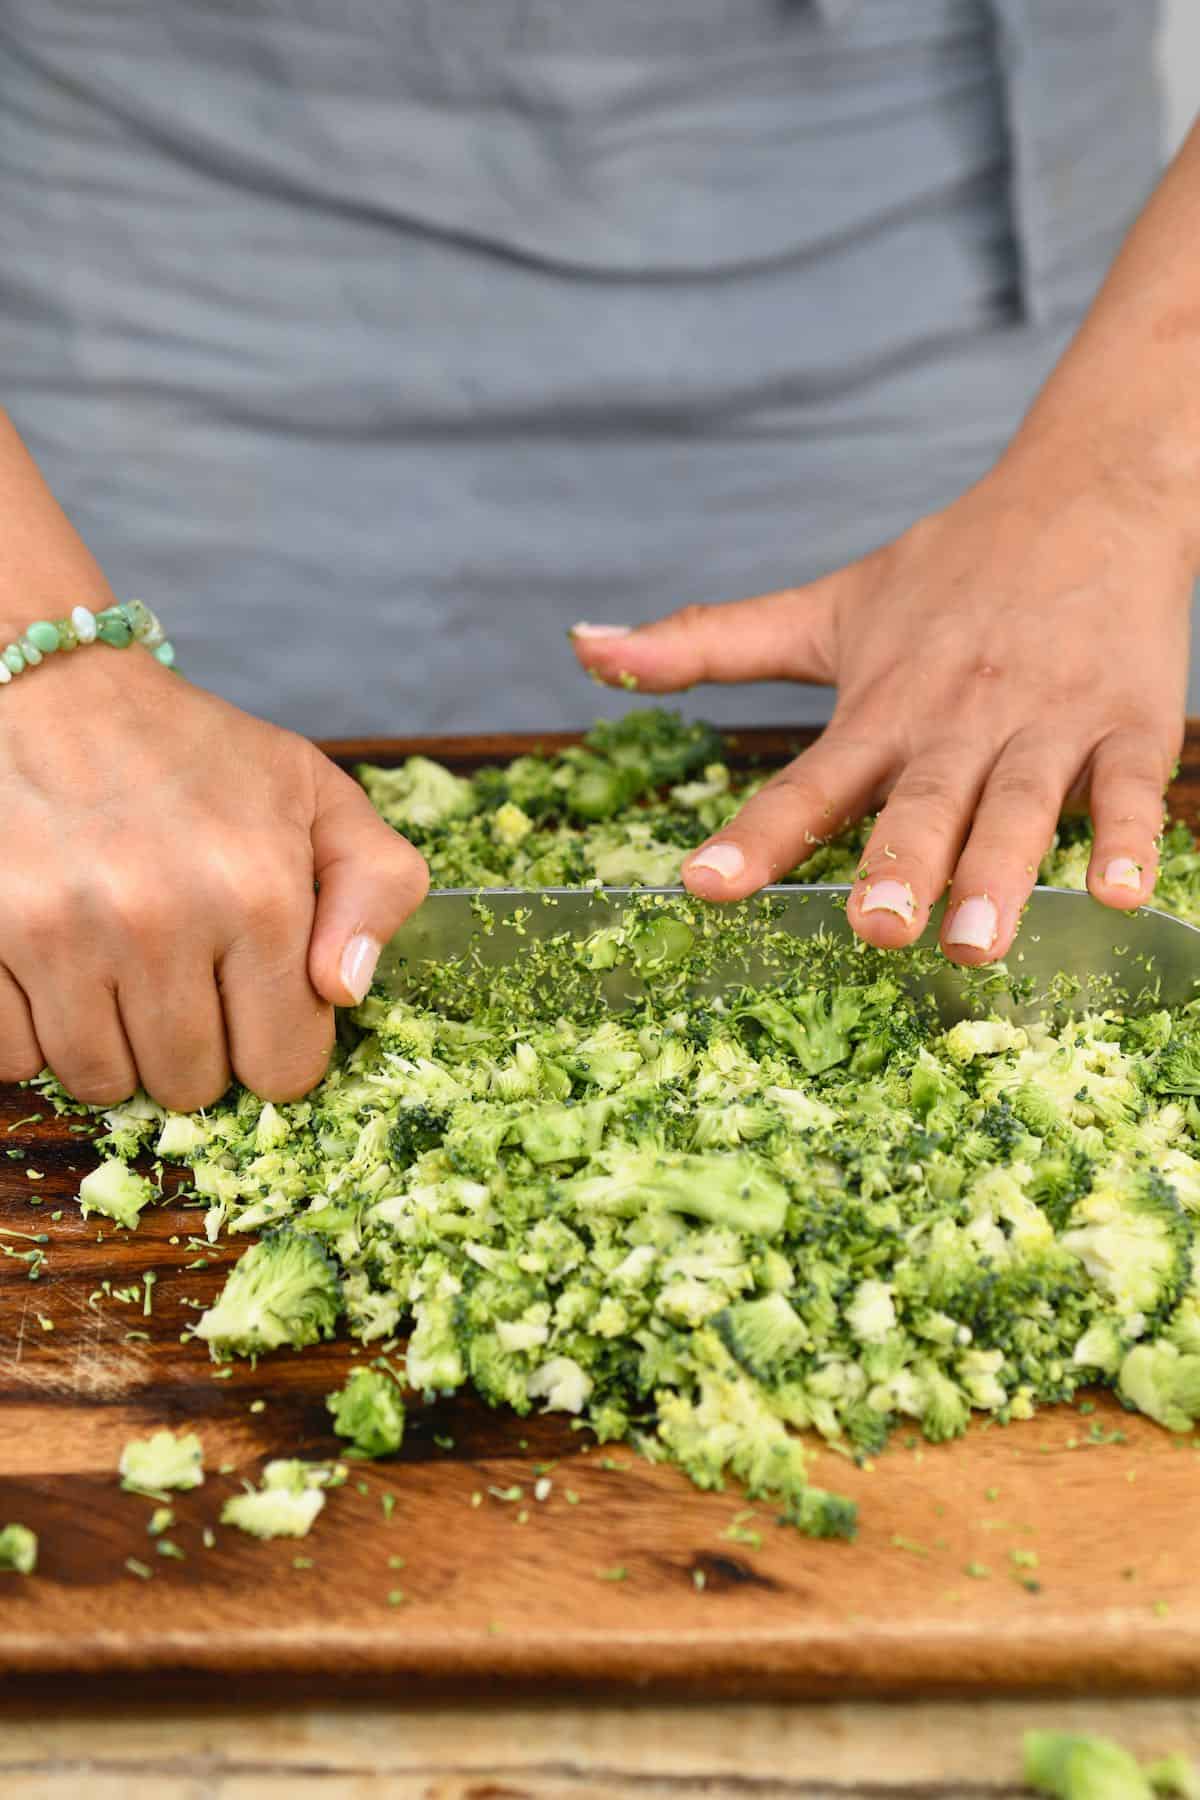 Shredding broccoli with a knife